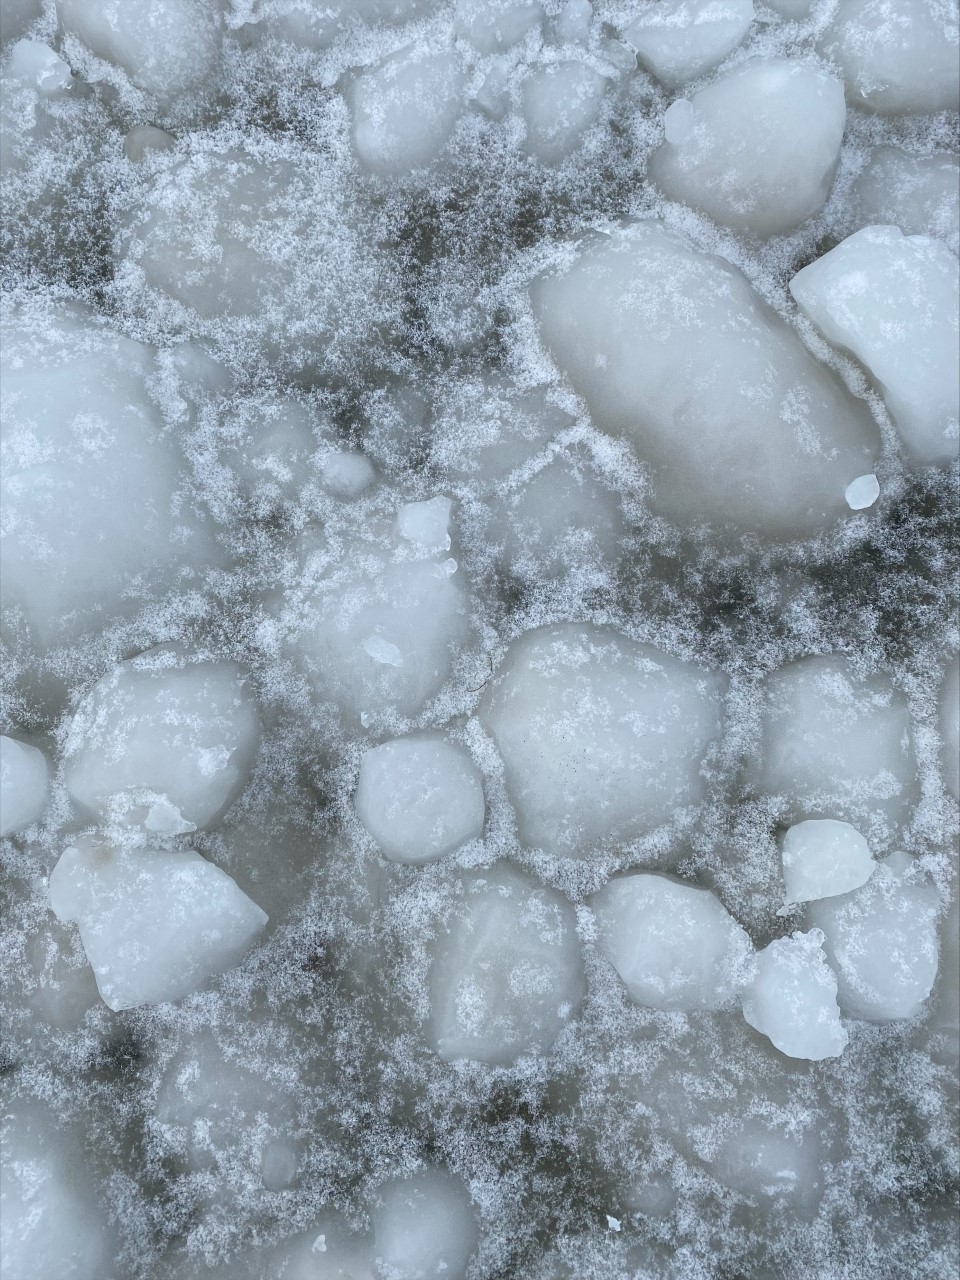 https://globalnews.ca/wp-content/uploads/2021/11/Steep-Rock-Ice-Balls-1.jpg?quality=85&strip=all&w=960